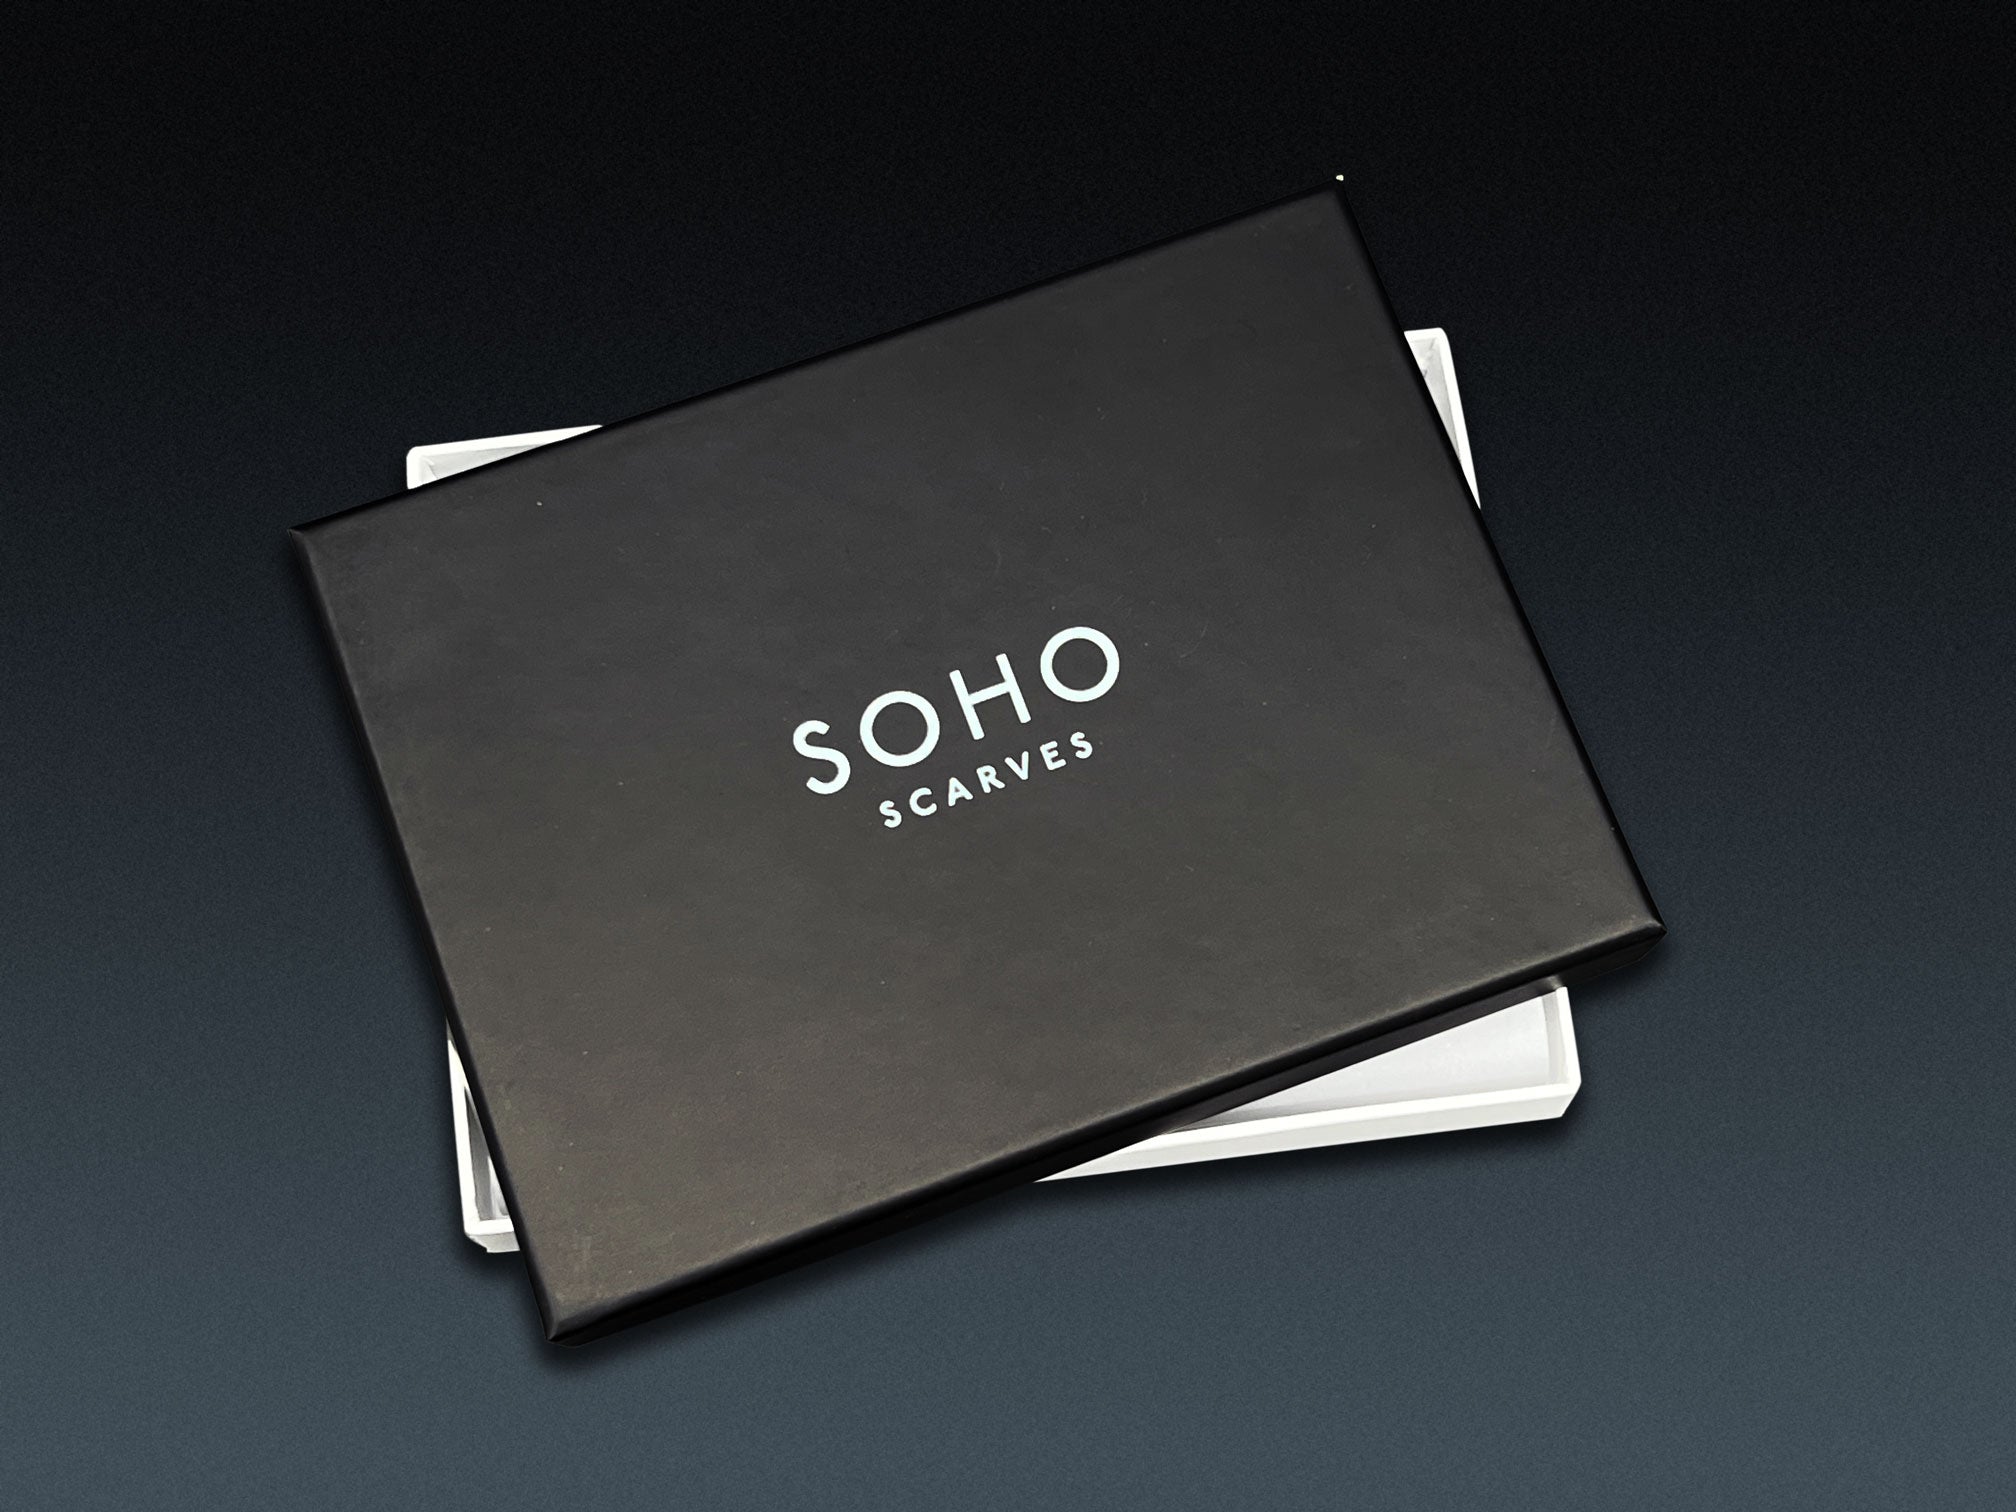 Small deluxe SOHO Scarves gift box for 'The Sun' neckerchief.